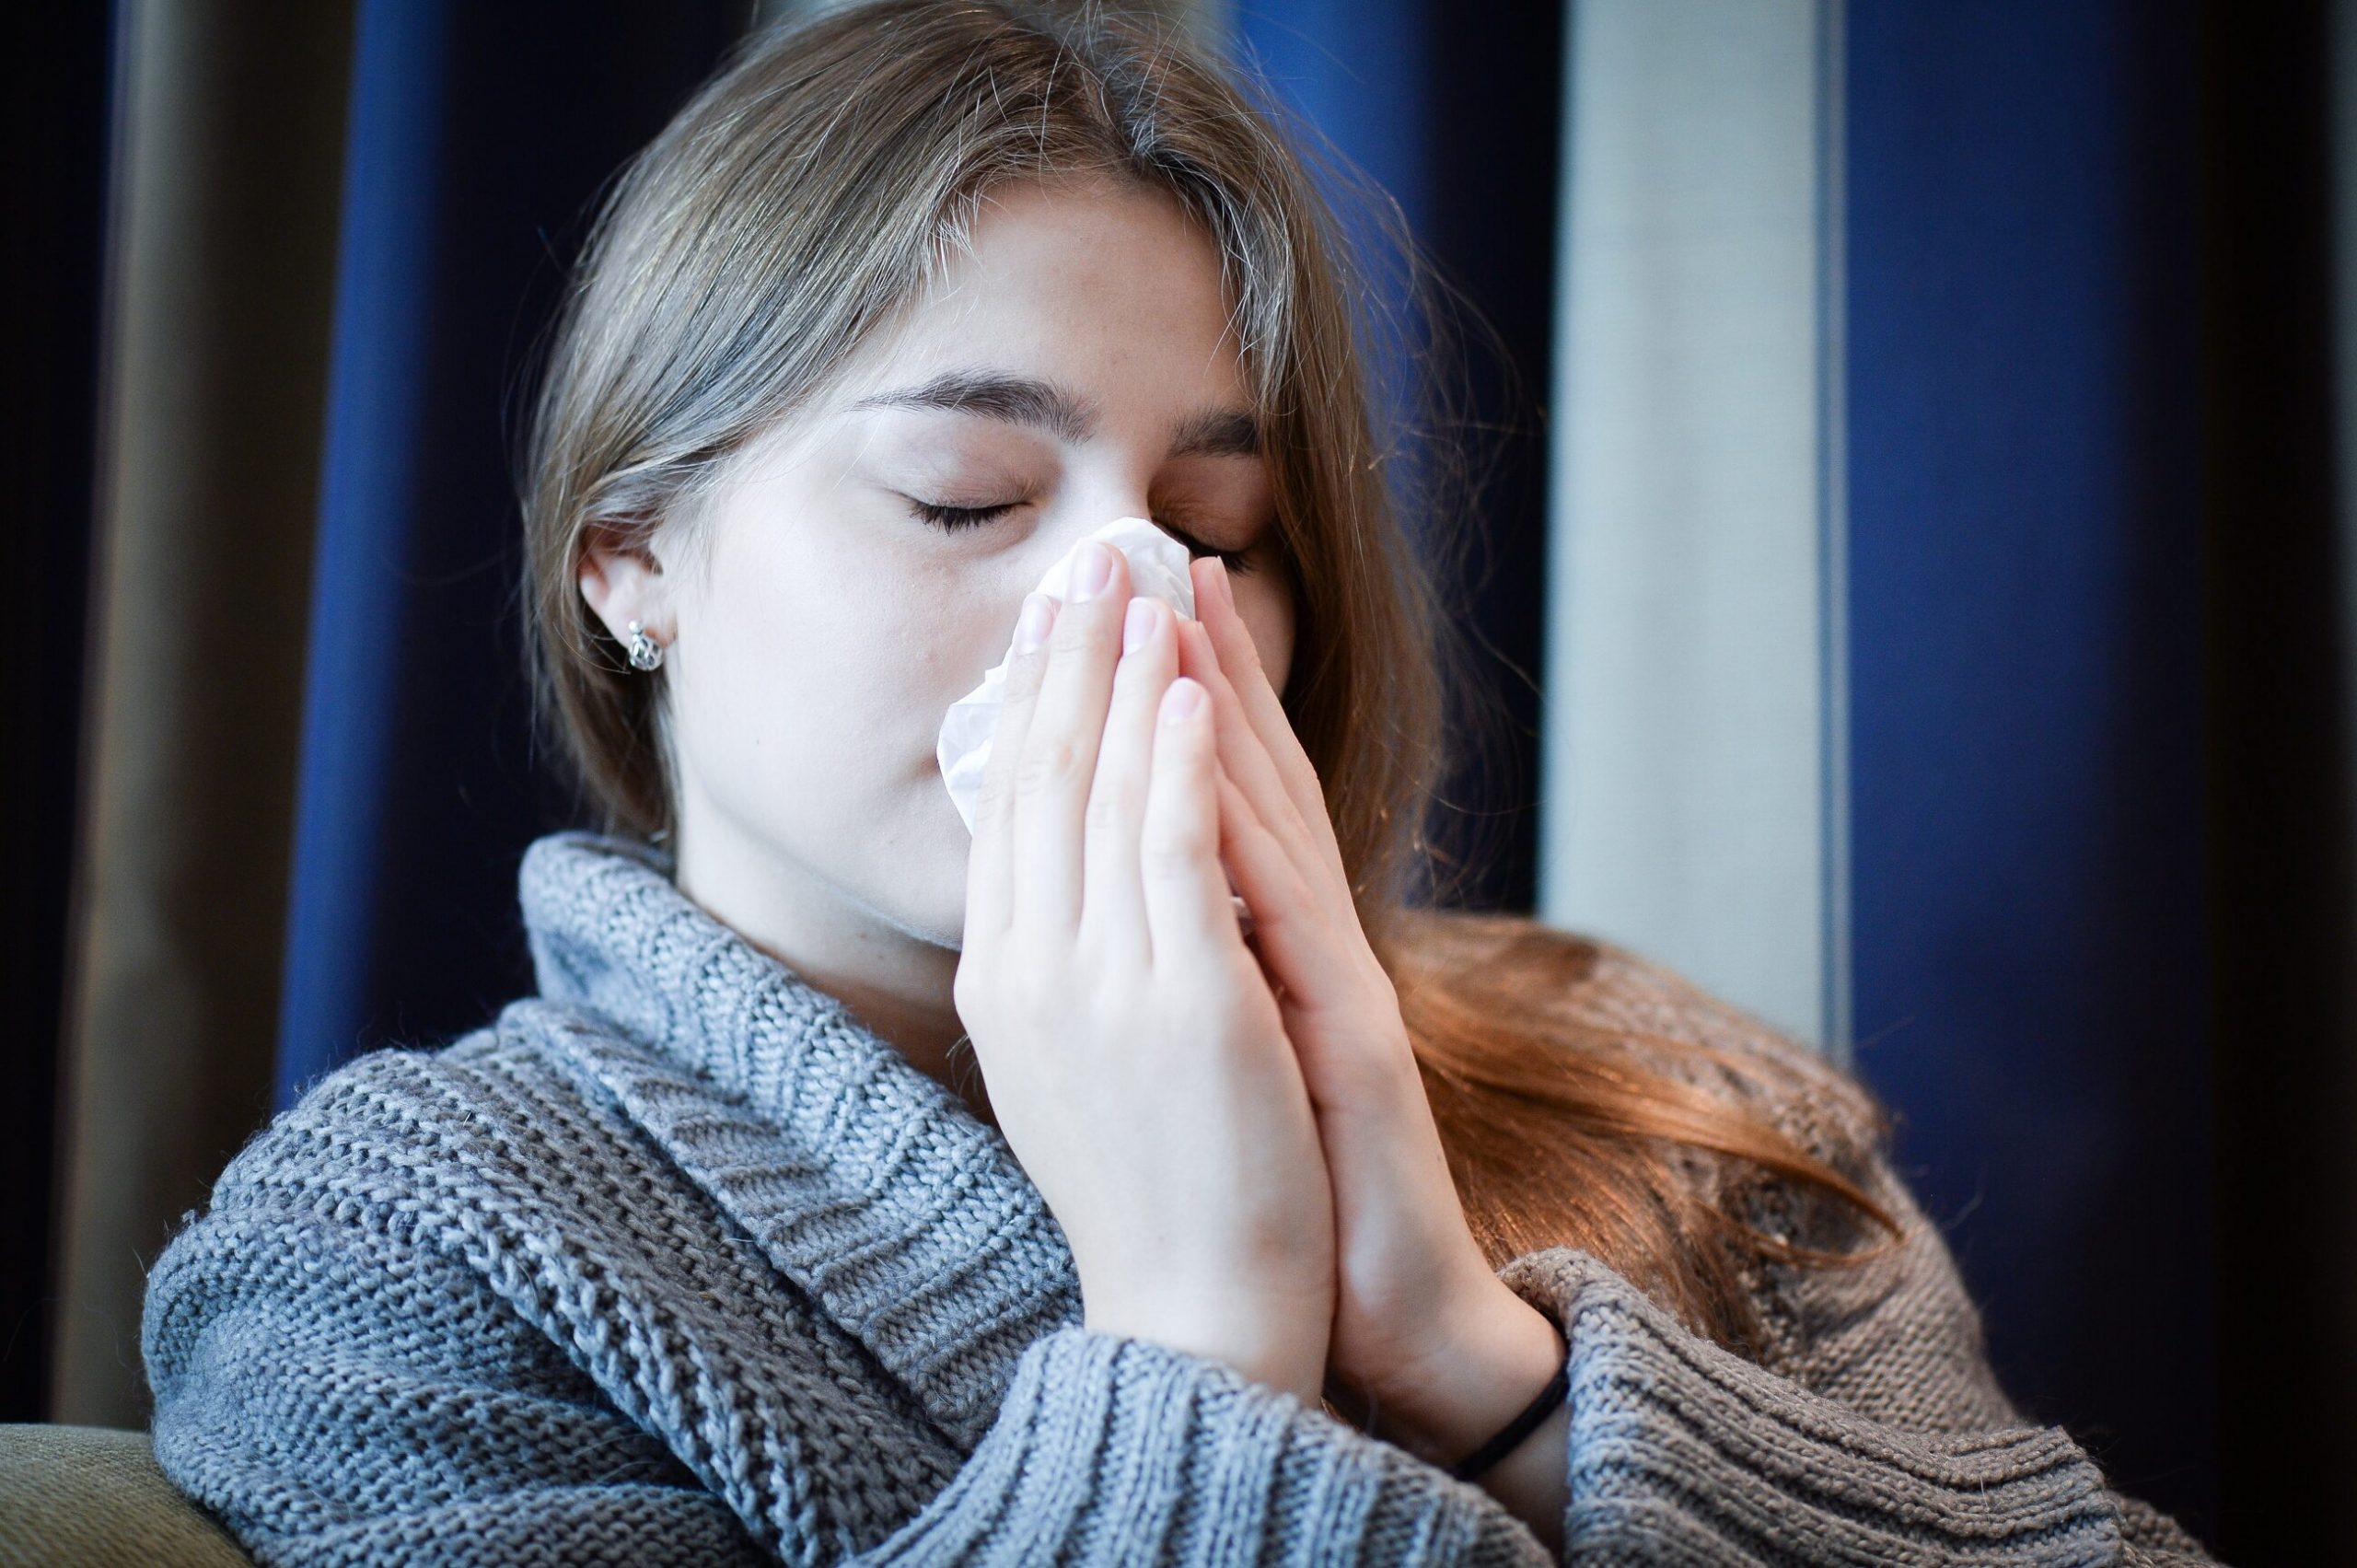 Most respiratory viruses spread through aerosols